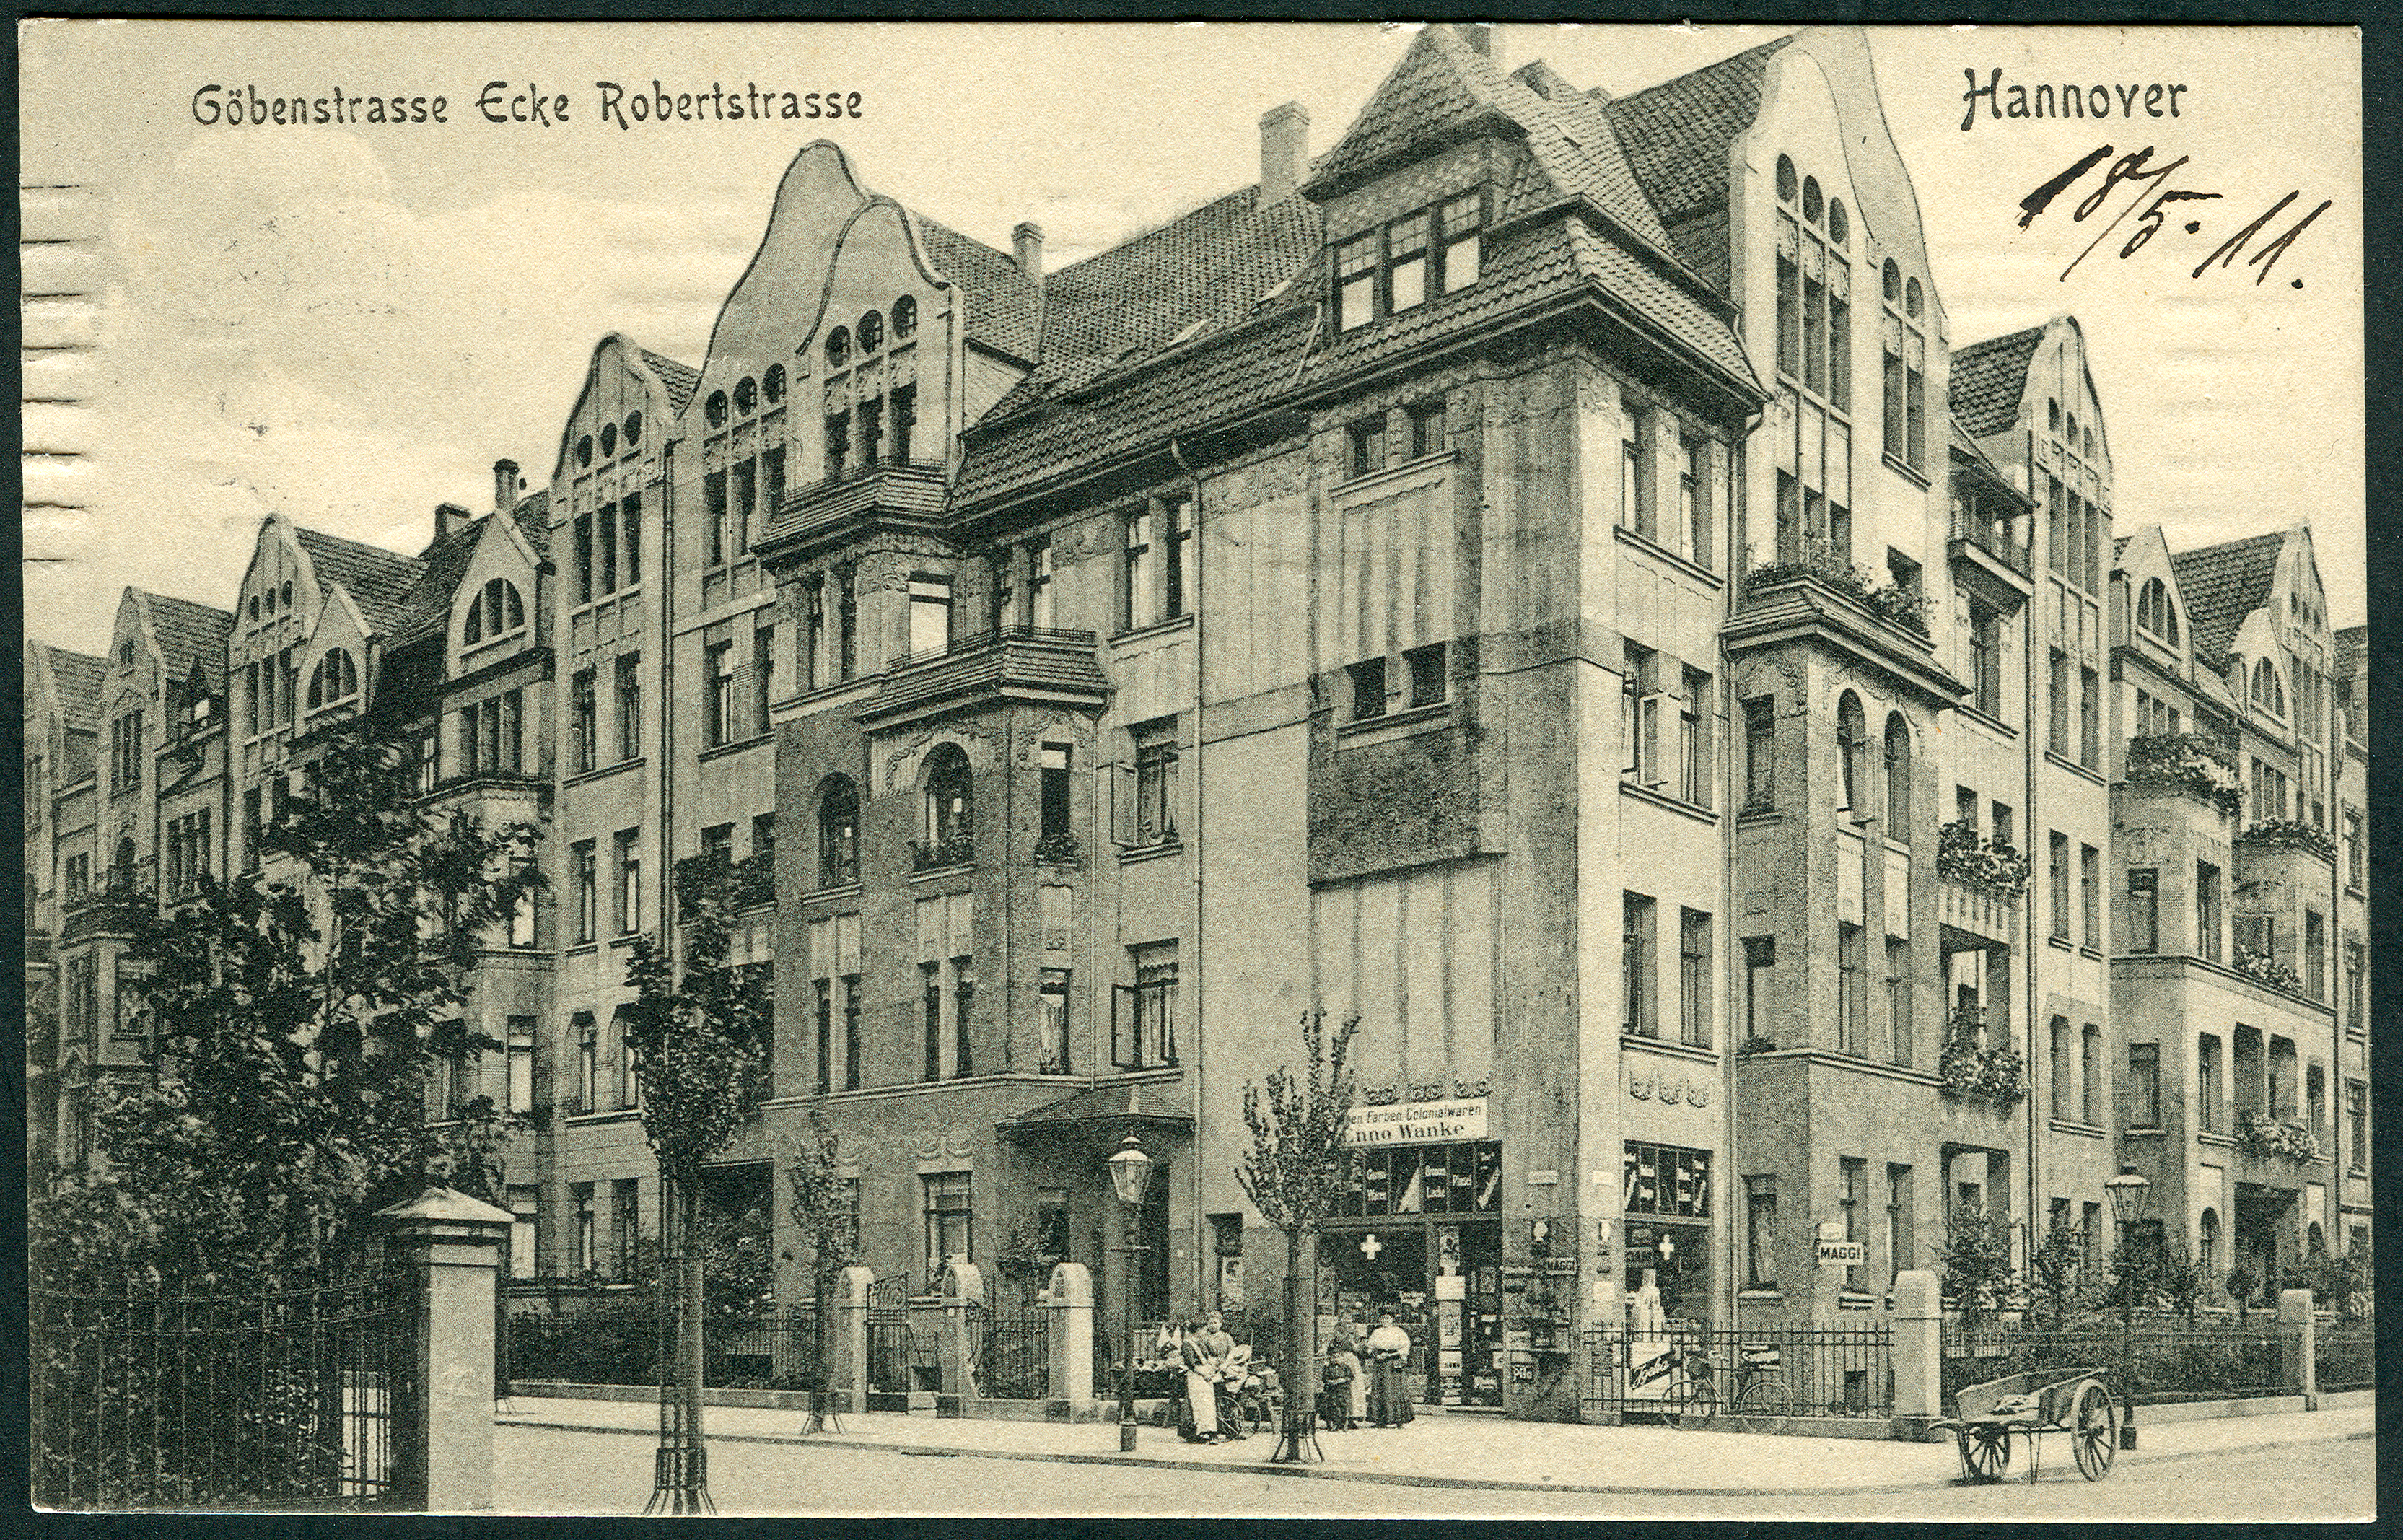 F. Astholz jun. AK 1300 Göbenstraße Ecke Robertstraße Hannover, Bildseite ... Farben Colonialwaren Enno Wanke